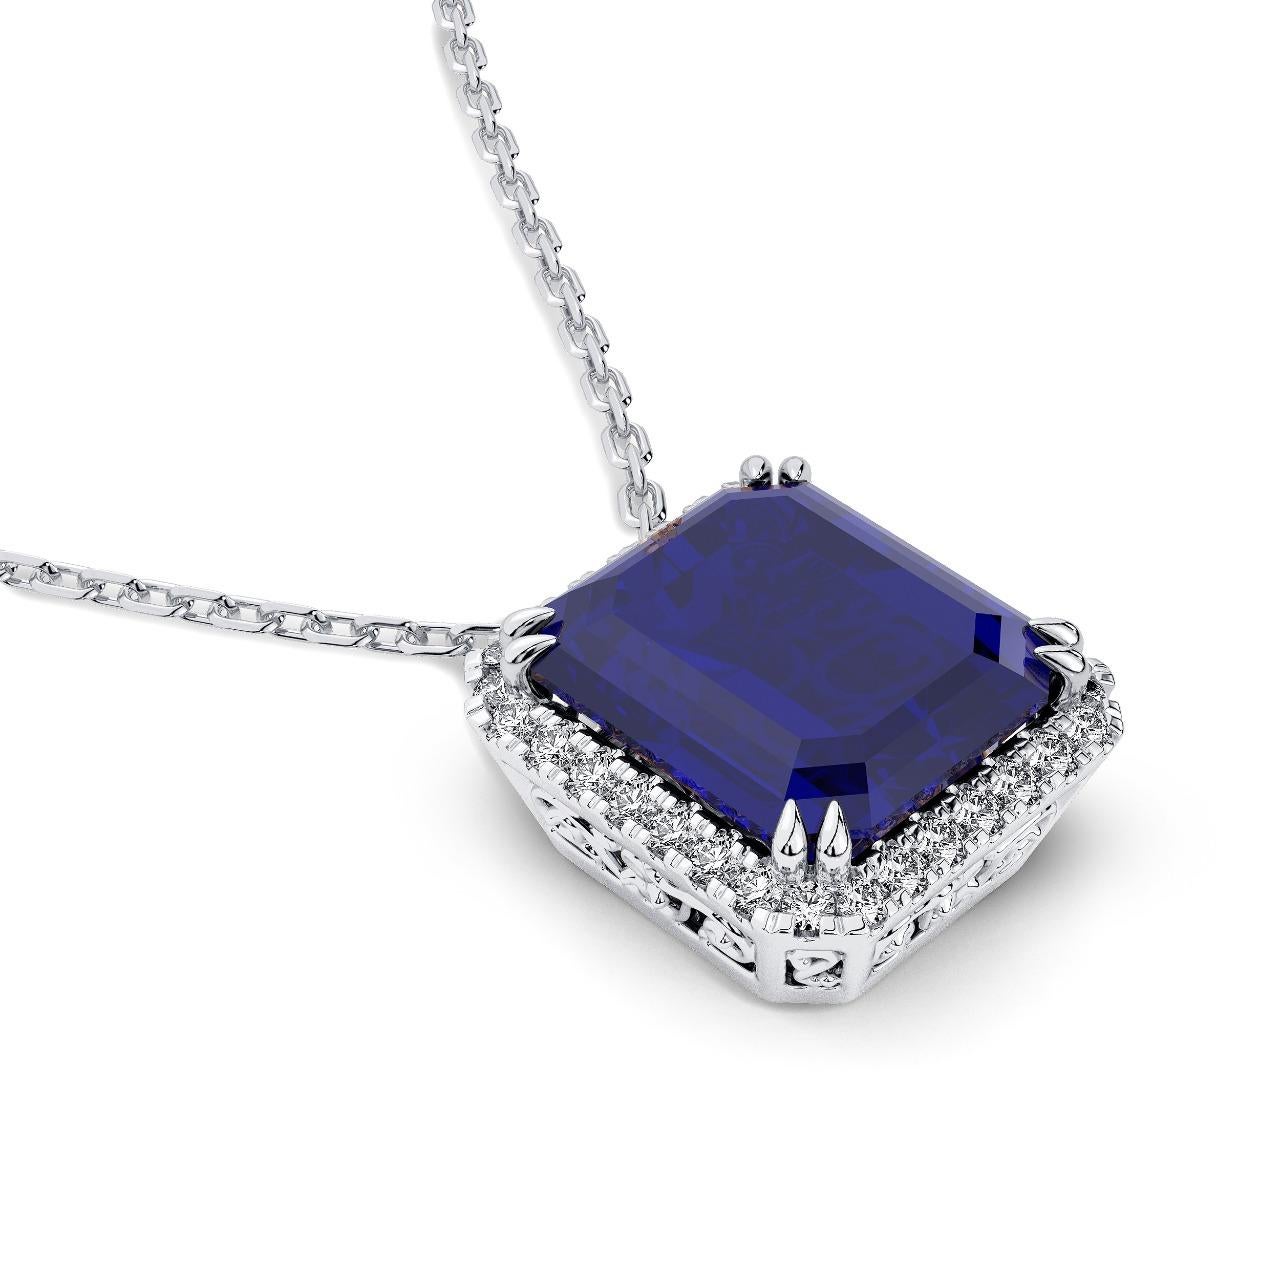 18K White Gold 14.5gm 
57.45ct Royal Blue Natural Tanzanite Radiant Cut VS Quality 
Diamonds 2.20ct D color flawless VVS Clarity
